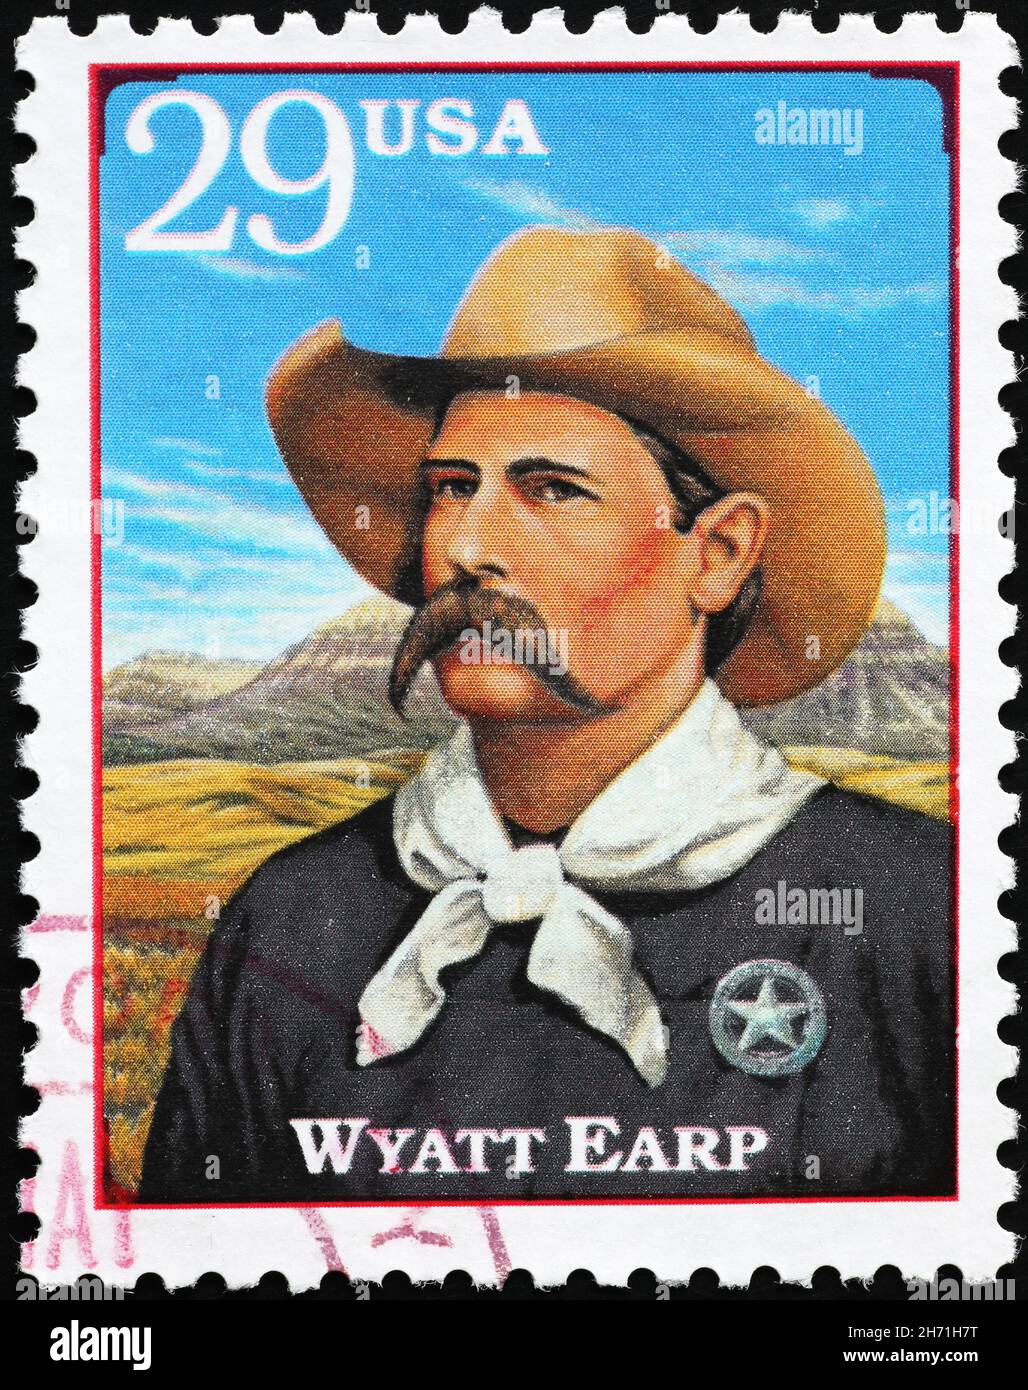 Wyatt Earp on american postage stamp Stock Photo